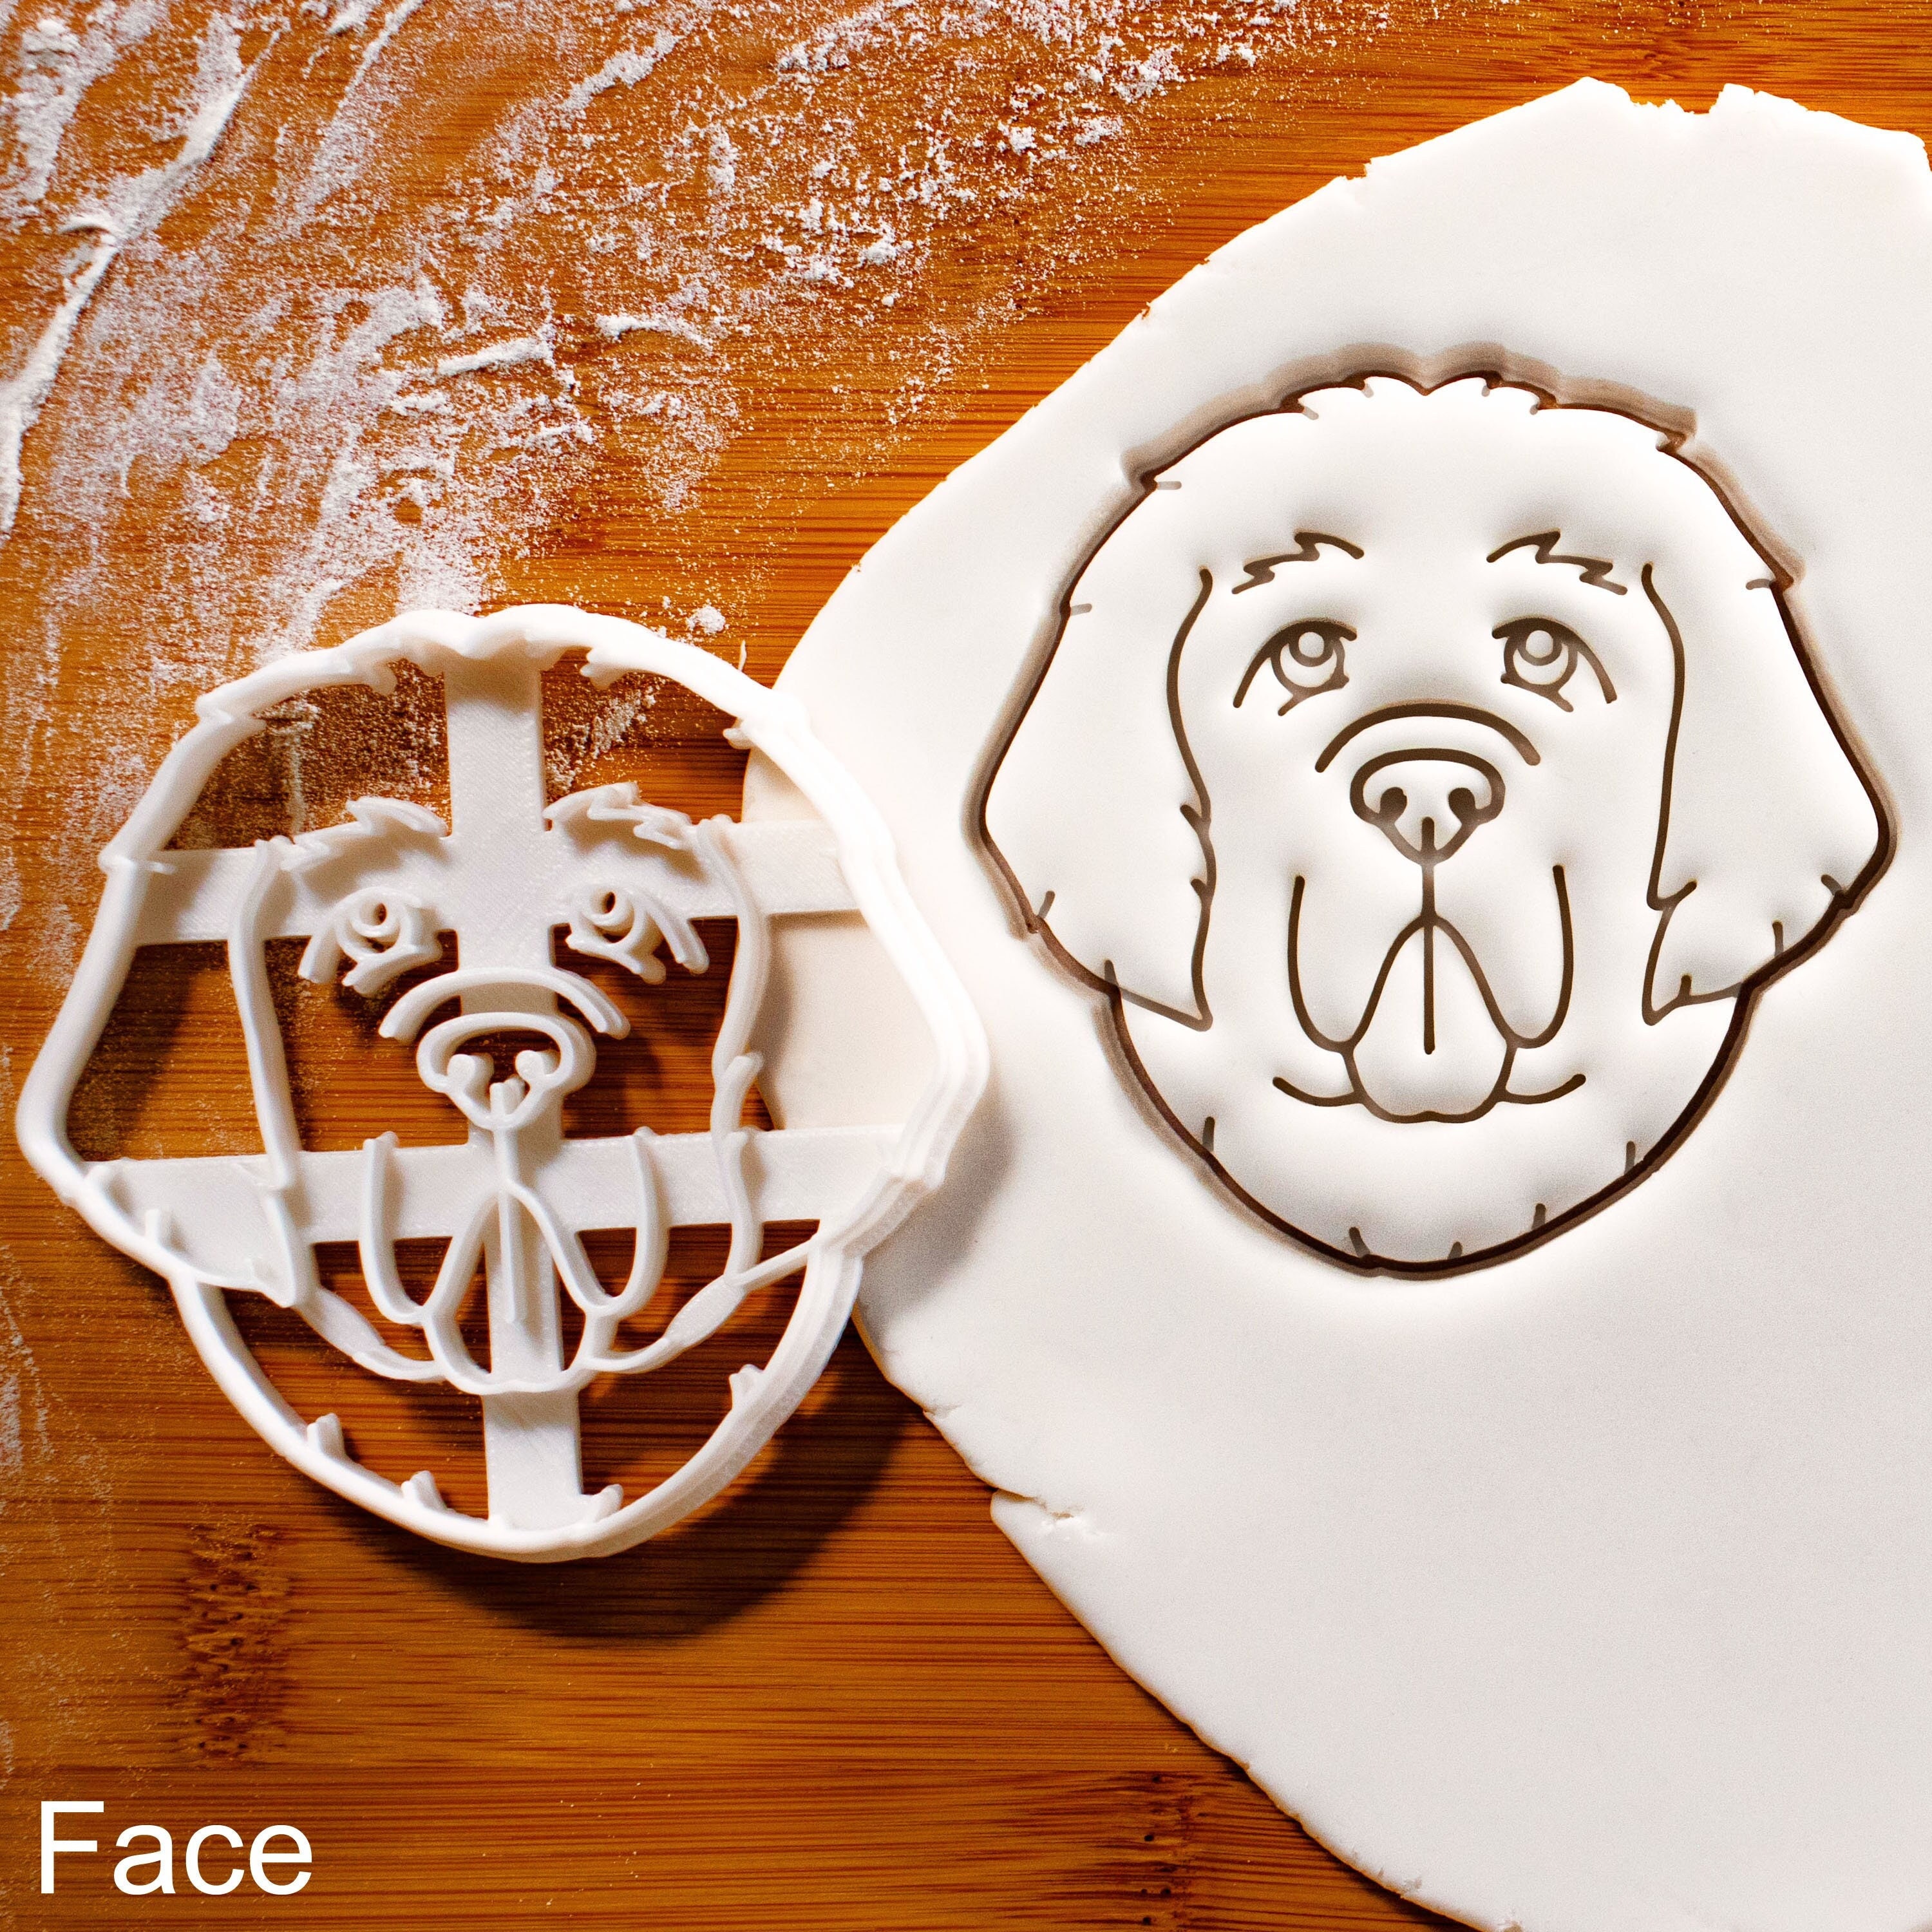 Nerf Logo 266-B928 Cookie Cutter Set